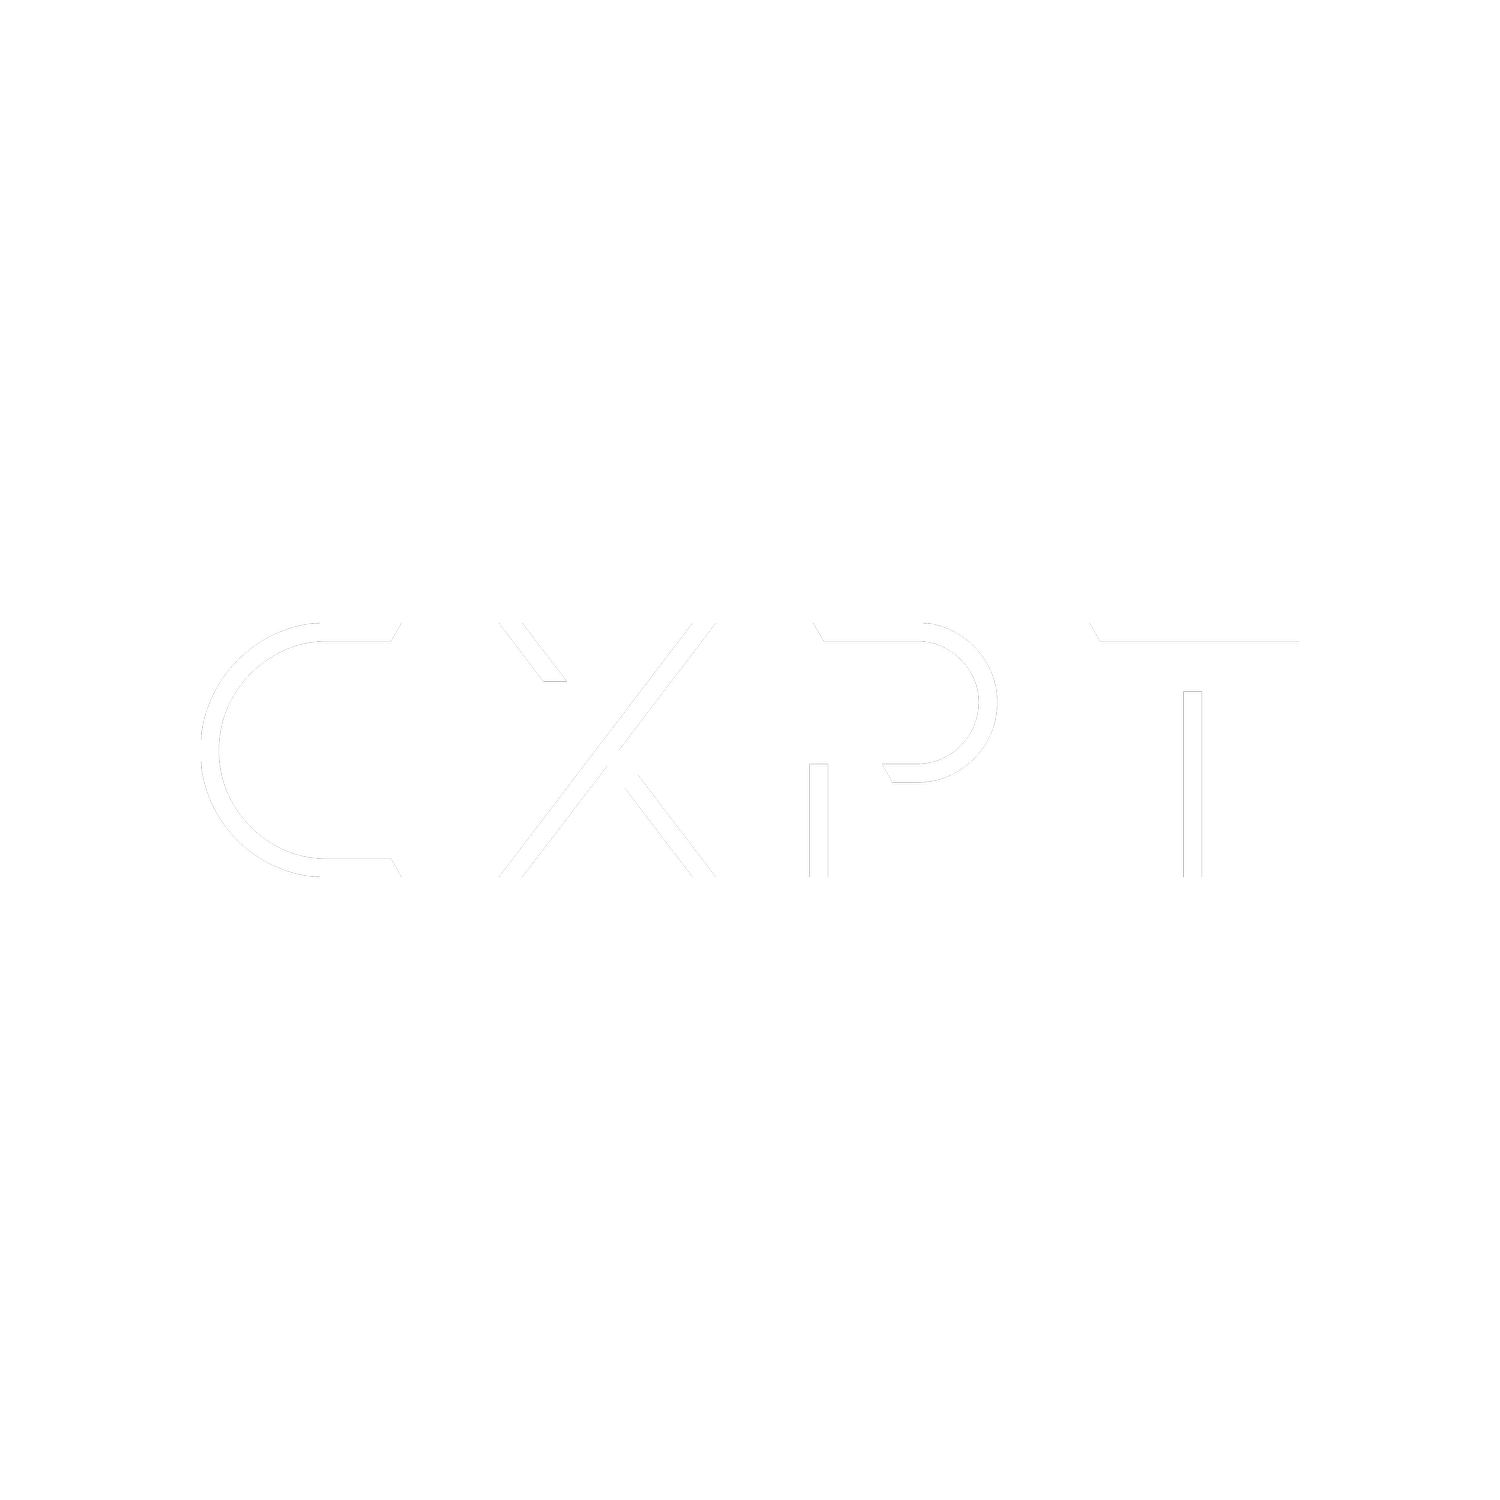 CXPT 